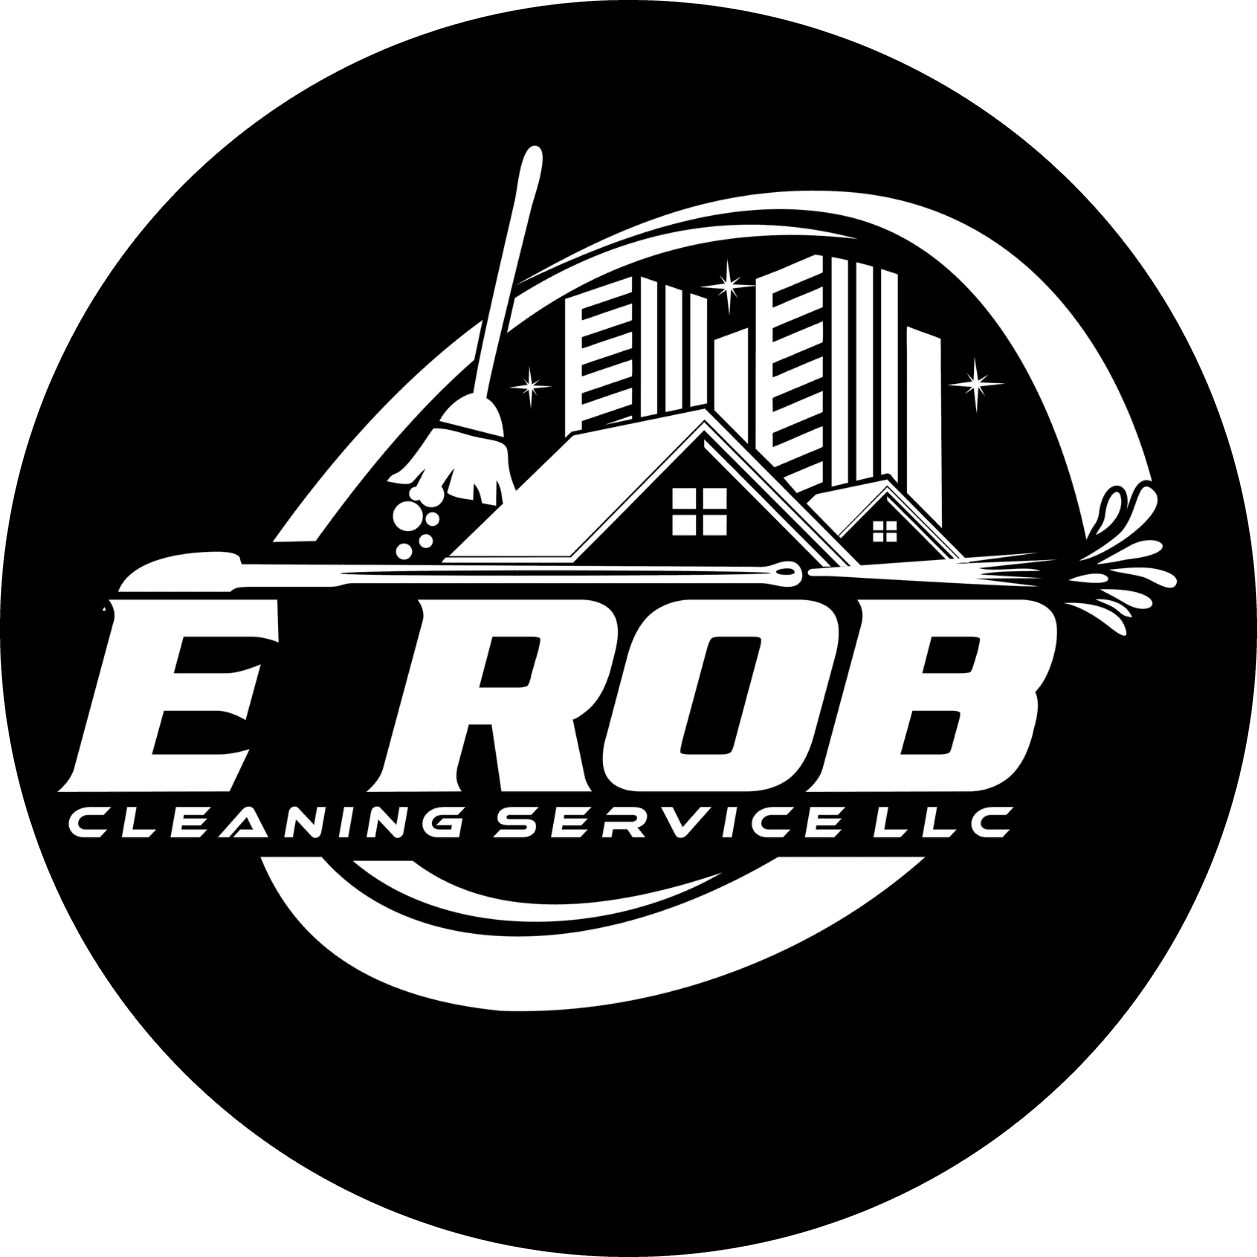 ERob Cleaning Service, LLC